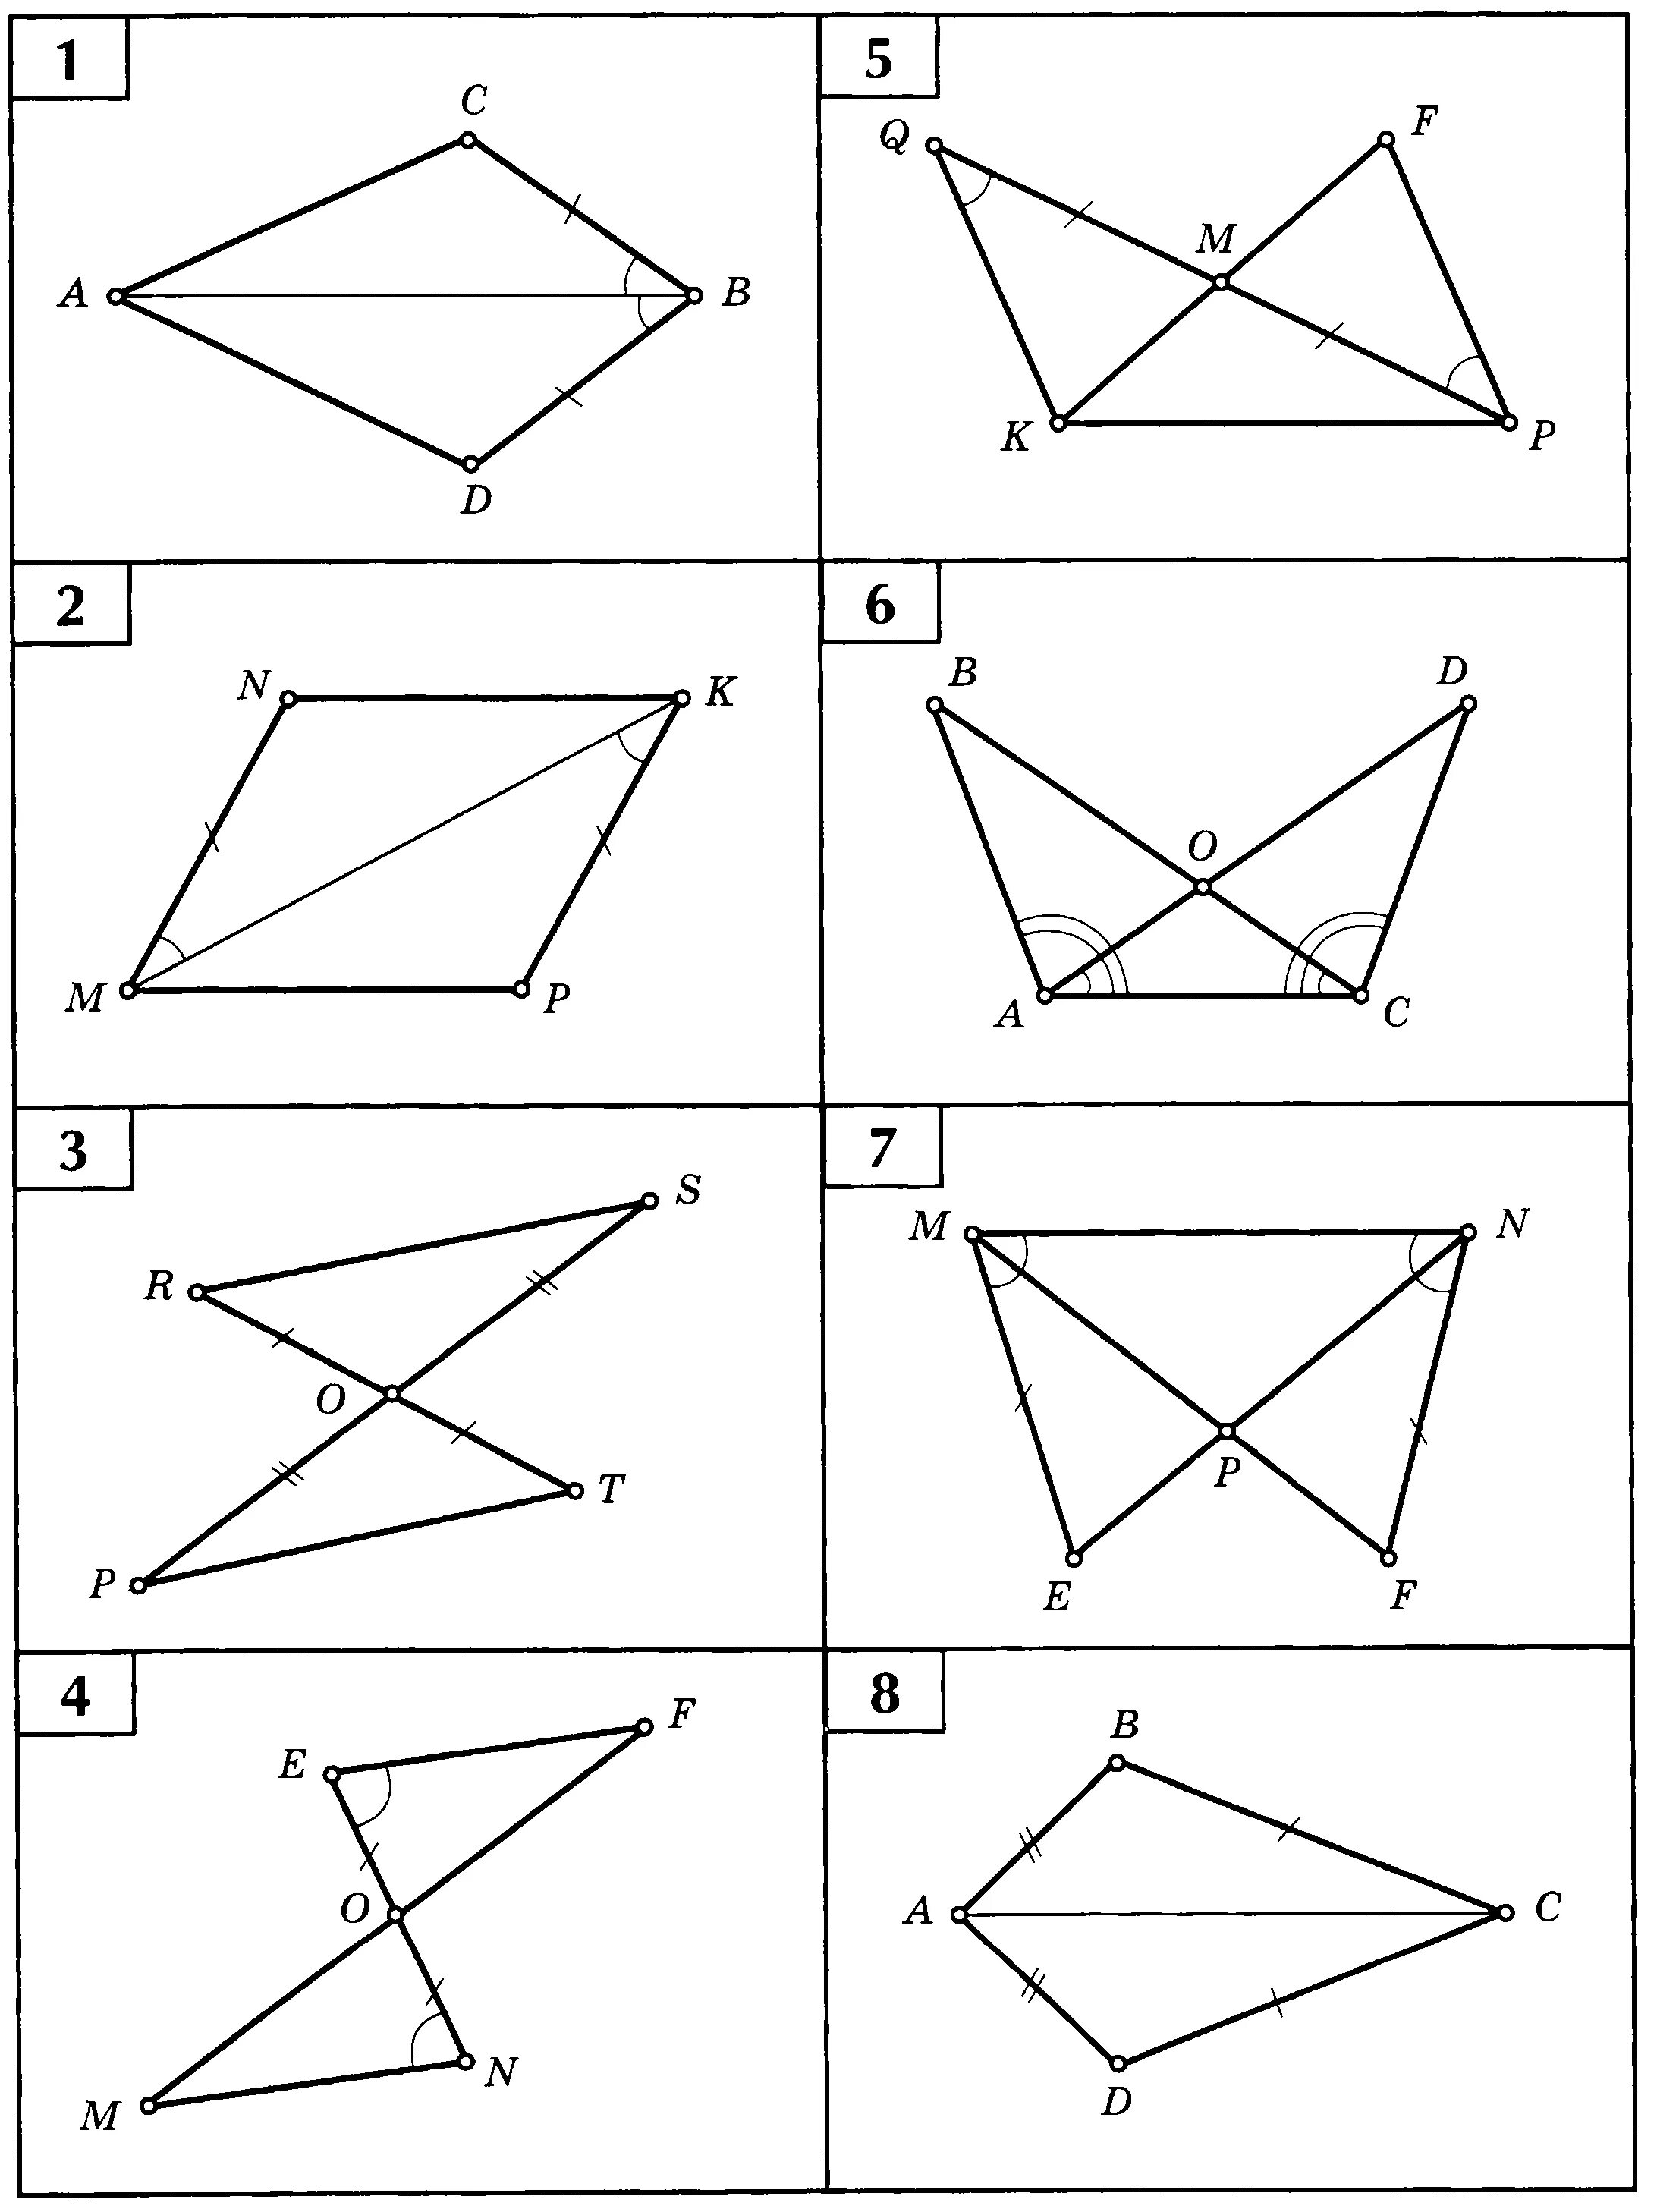 3 признаки равенства треугольников задачи. Признаки равенства треугольников 7 класс задачи на готовых чертежах. Признаки равенства треугольников по готовым чертежам. Задачи на равенство треугольников по готовым чертежам. Признаки равенства треугольников задачи по готовым чертежам.